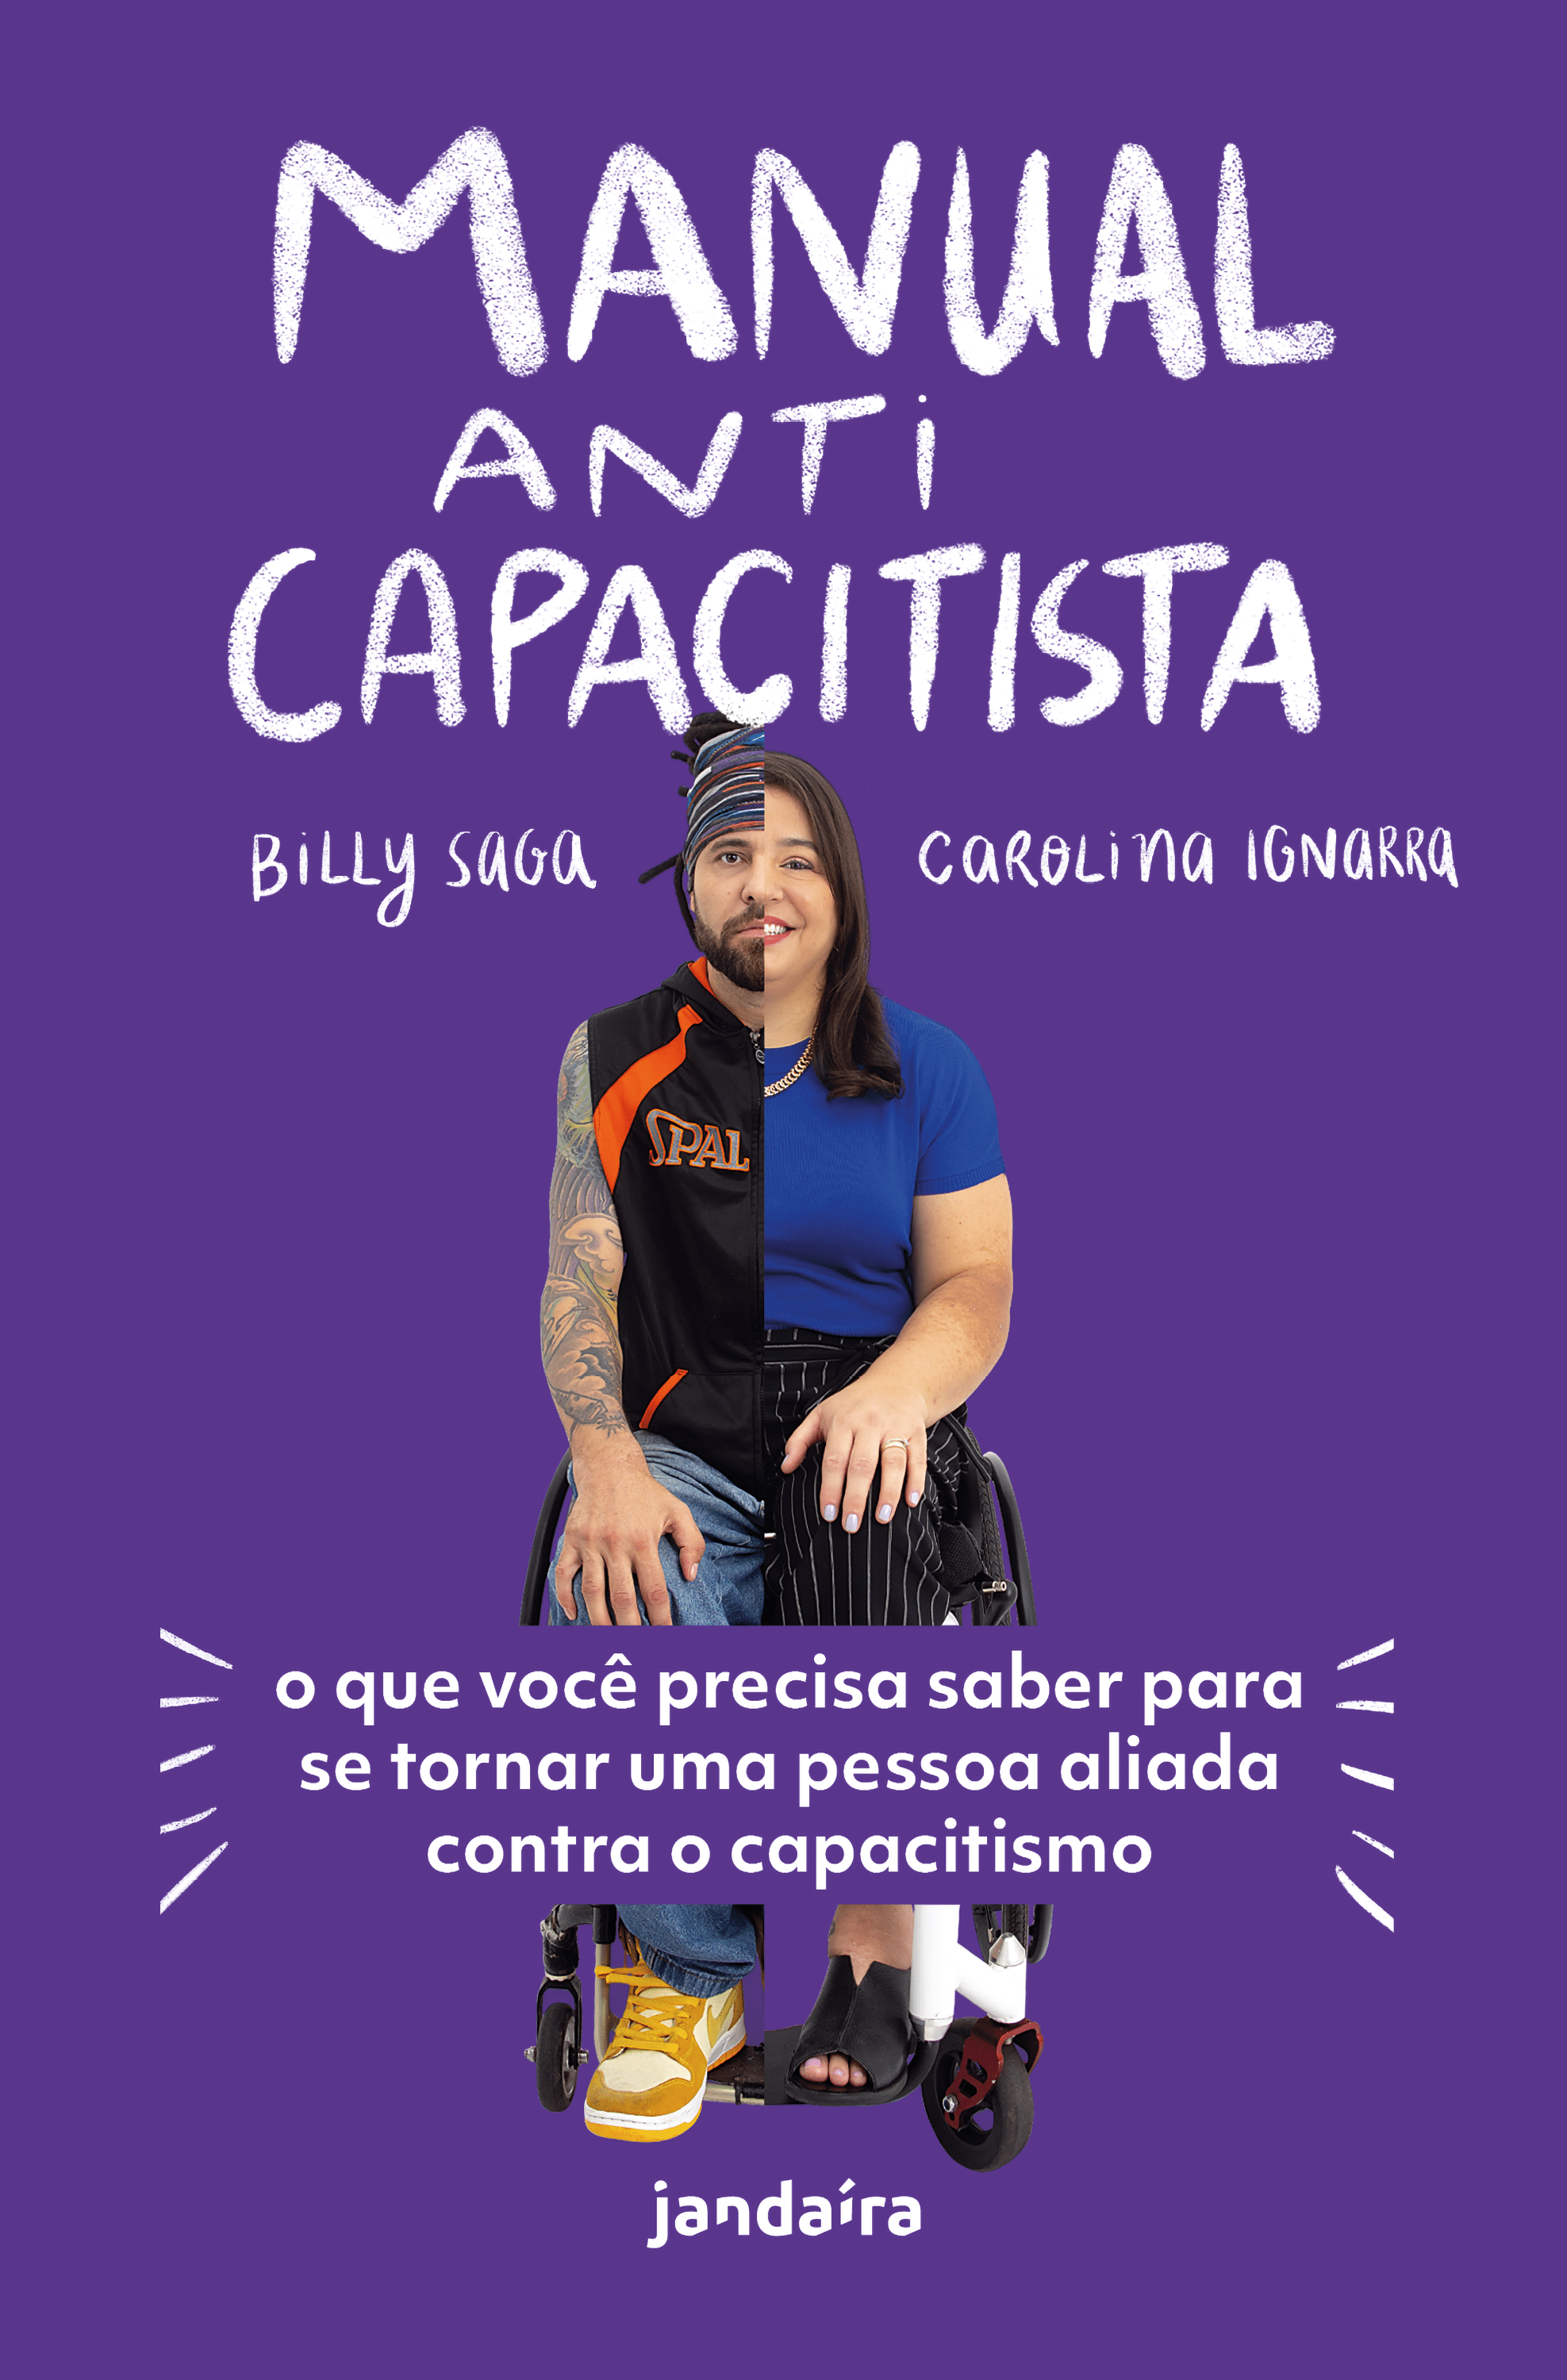 Desconstruindo o Capacitismo: Conheça o “Manual Anticapacitista” de Carolina Ignarra e Billy Saga